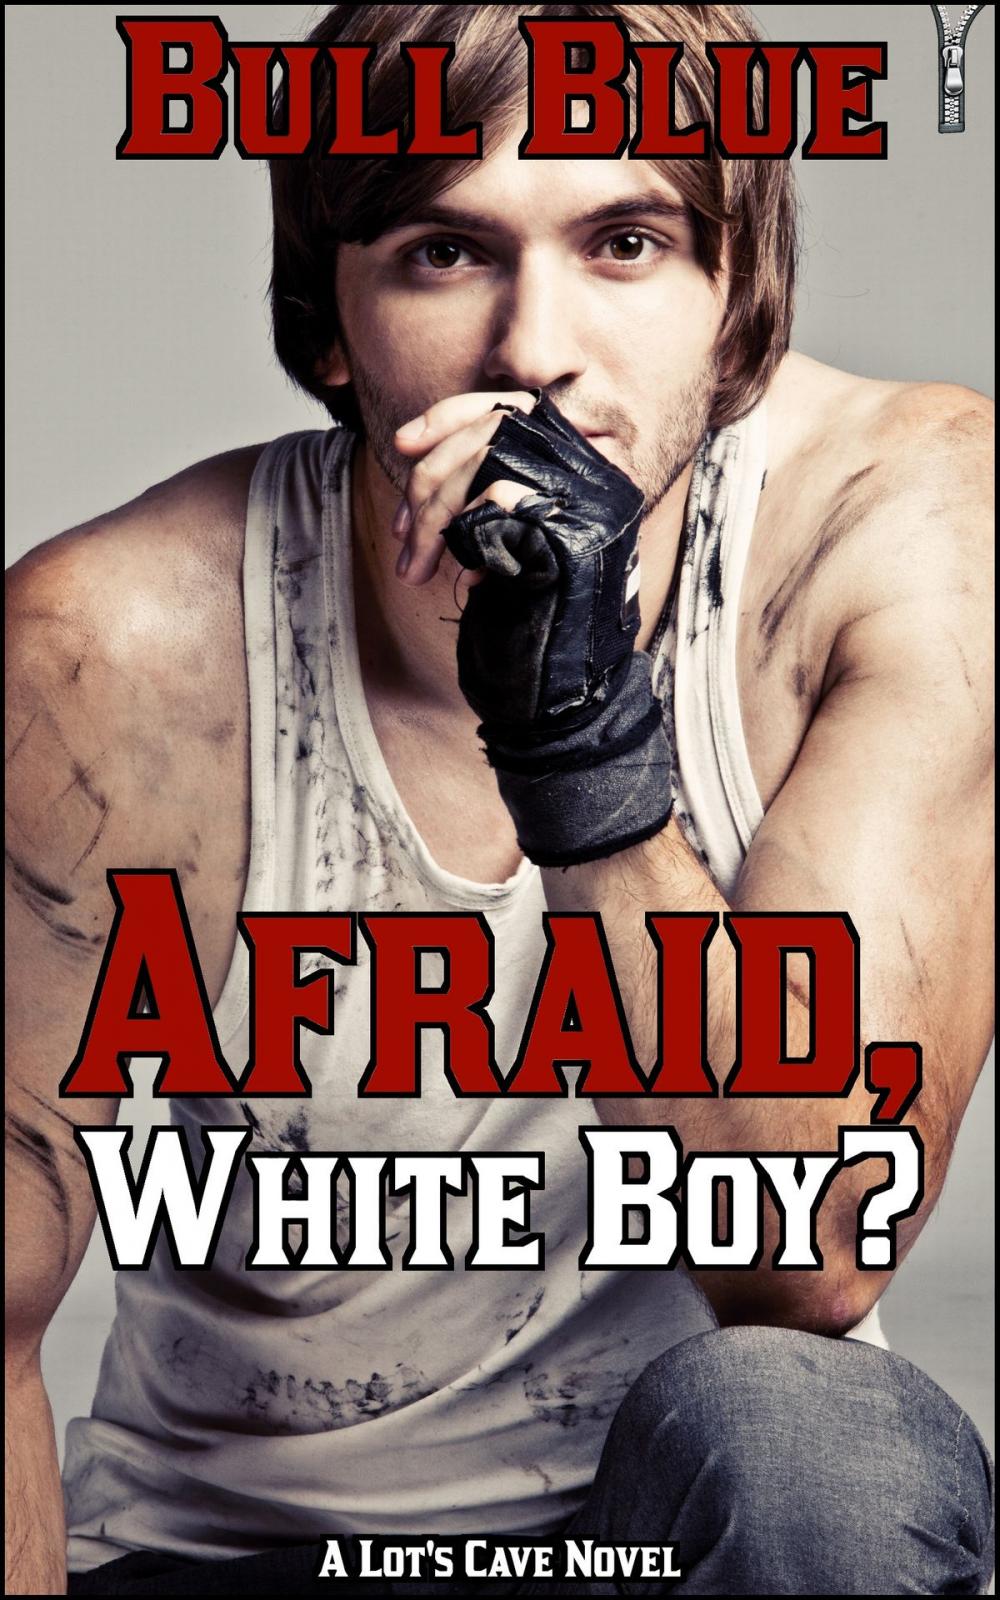 Big bigCover of Afraid, White Boy?